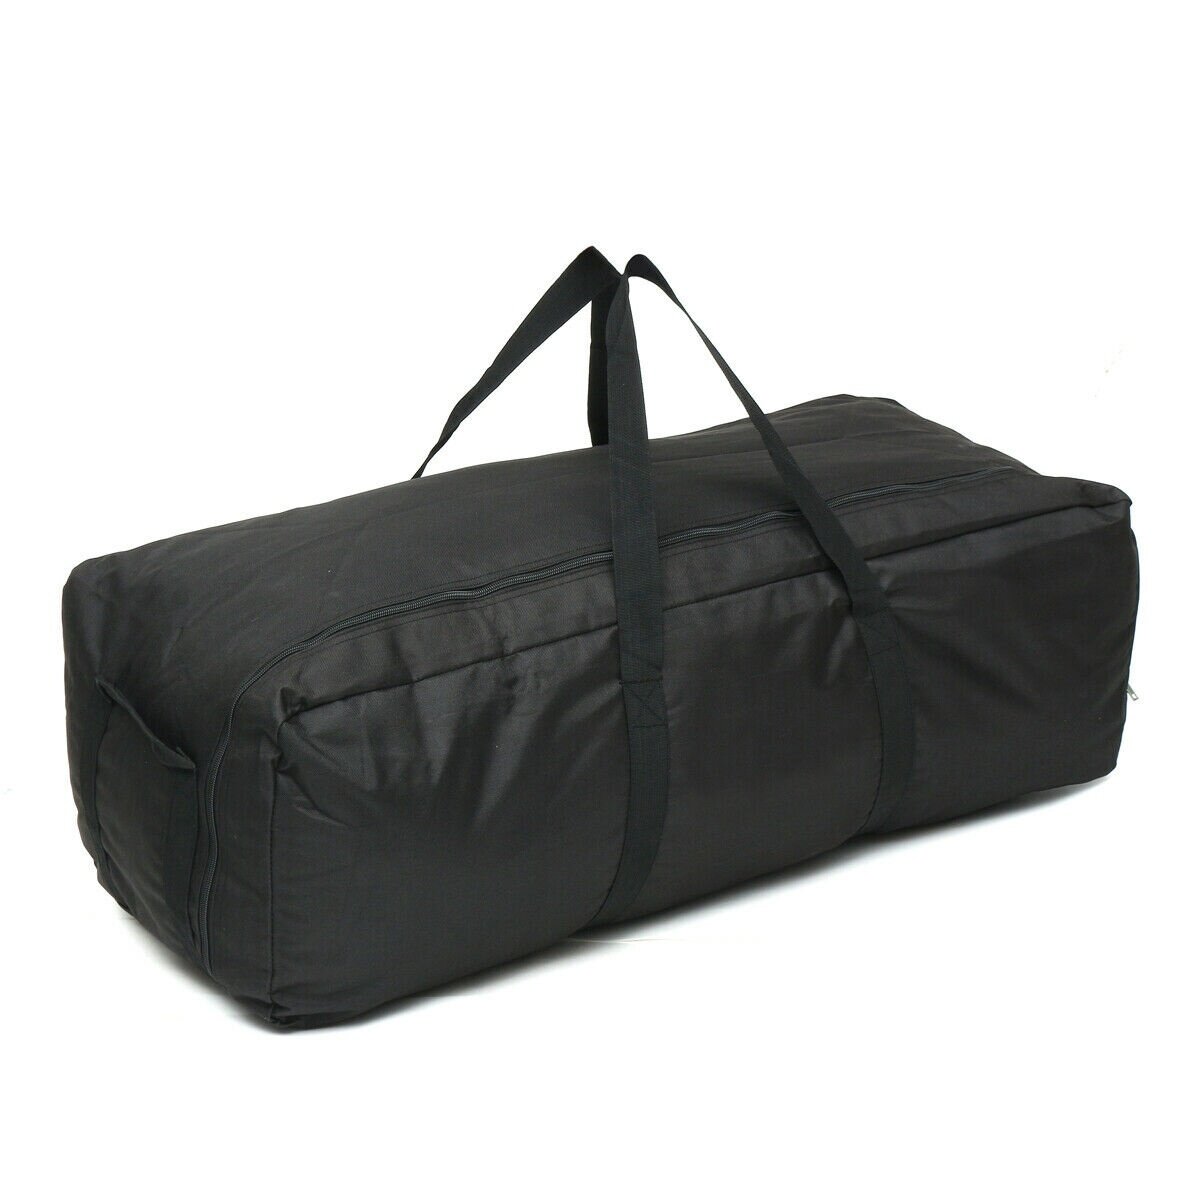 Image of Gym Bag Outdoor Men's Black Large Capacity Duffle Travel Gym Weekend Overnight Bag Waterproof Sport Bags